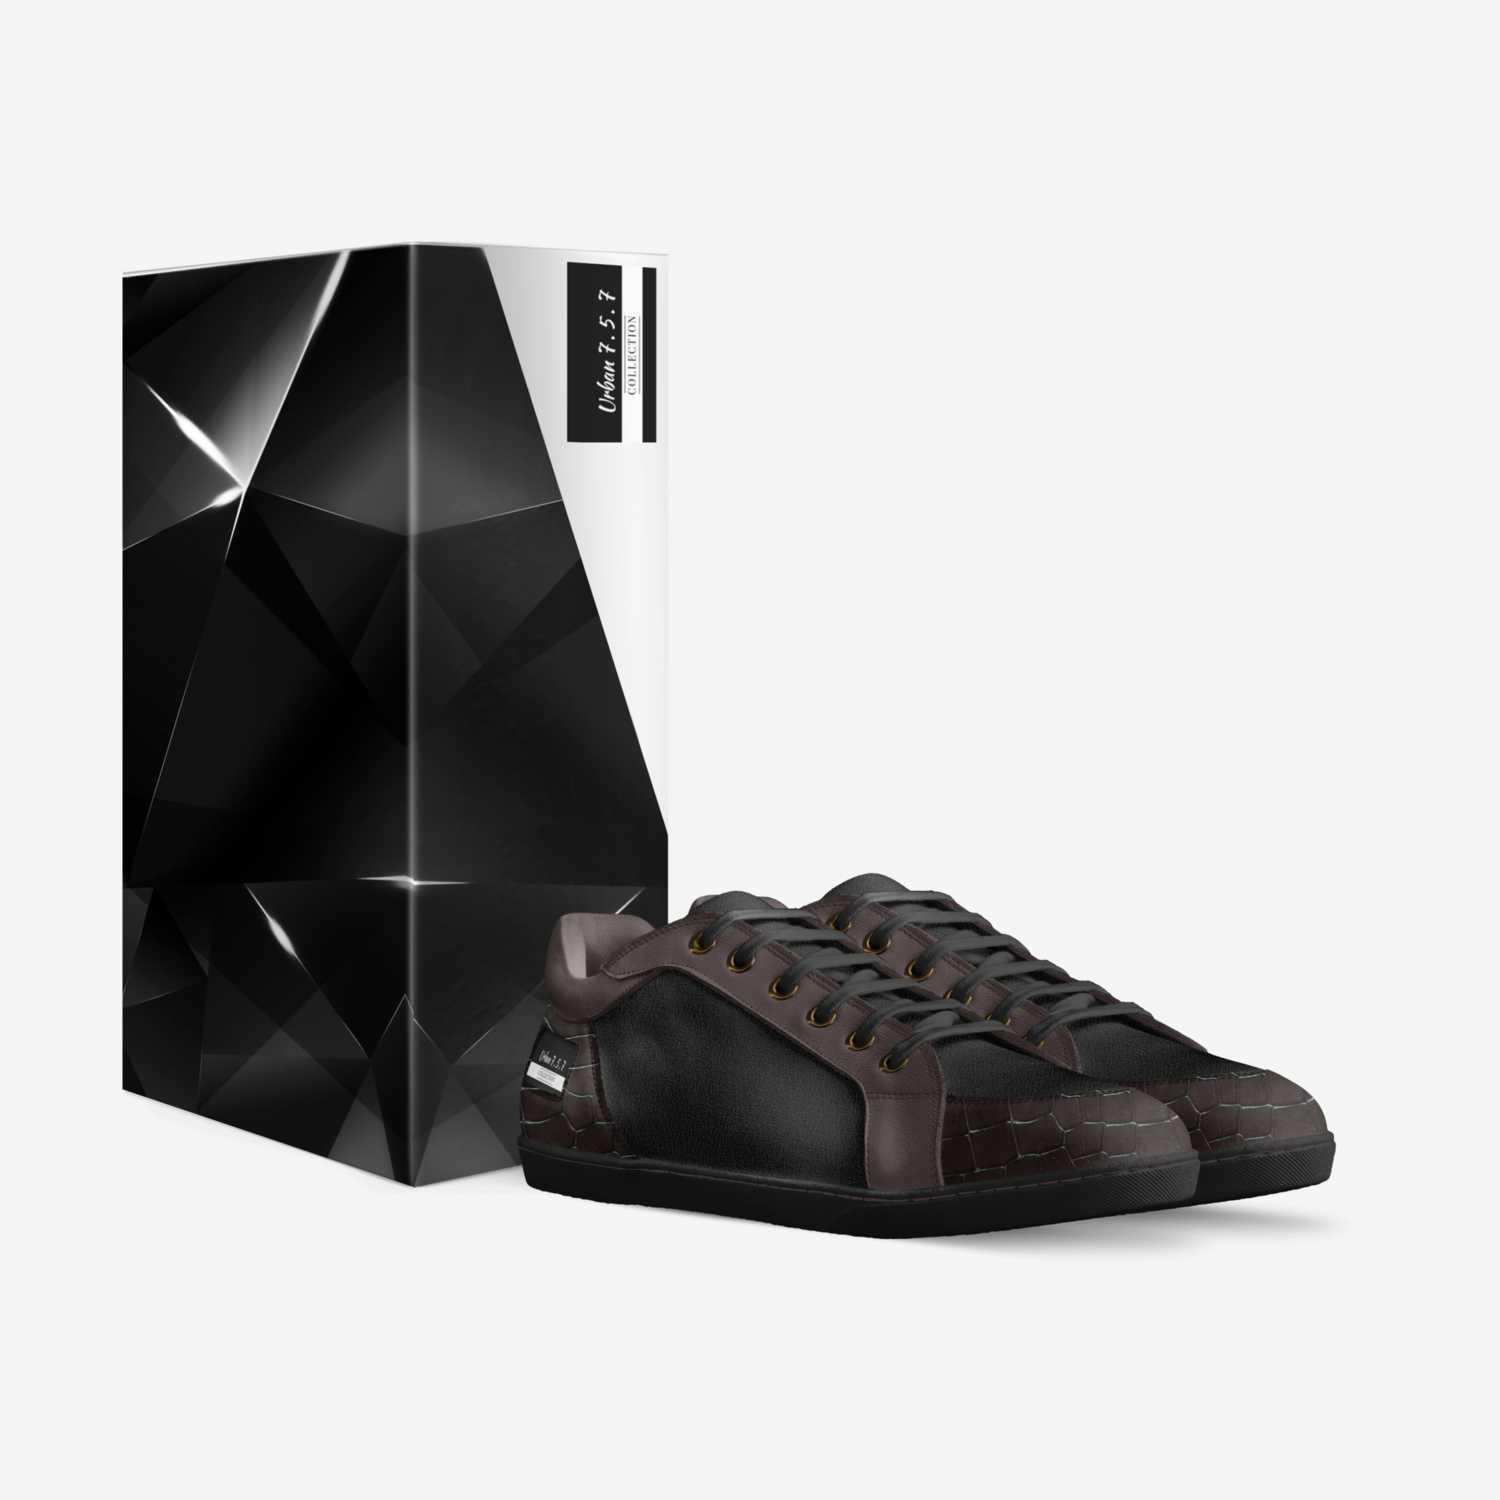 Urban 7 . 5 . 7 custom made in Italy shoes by Deirdre Lynn | Box view